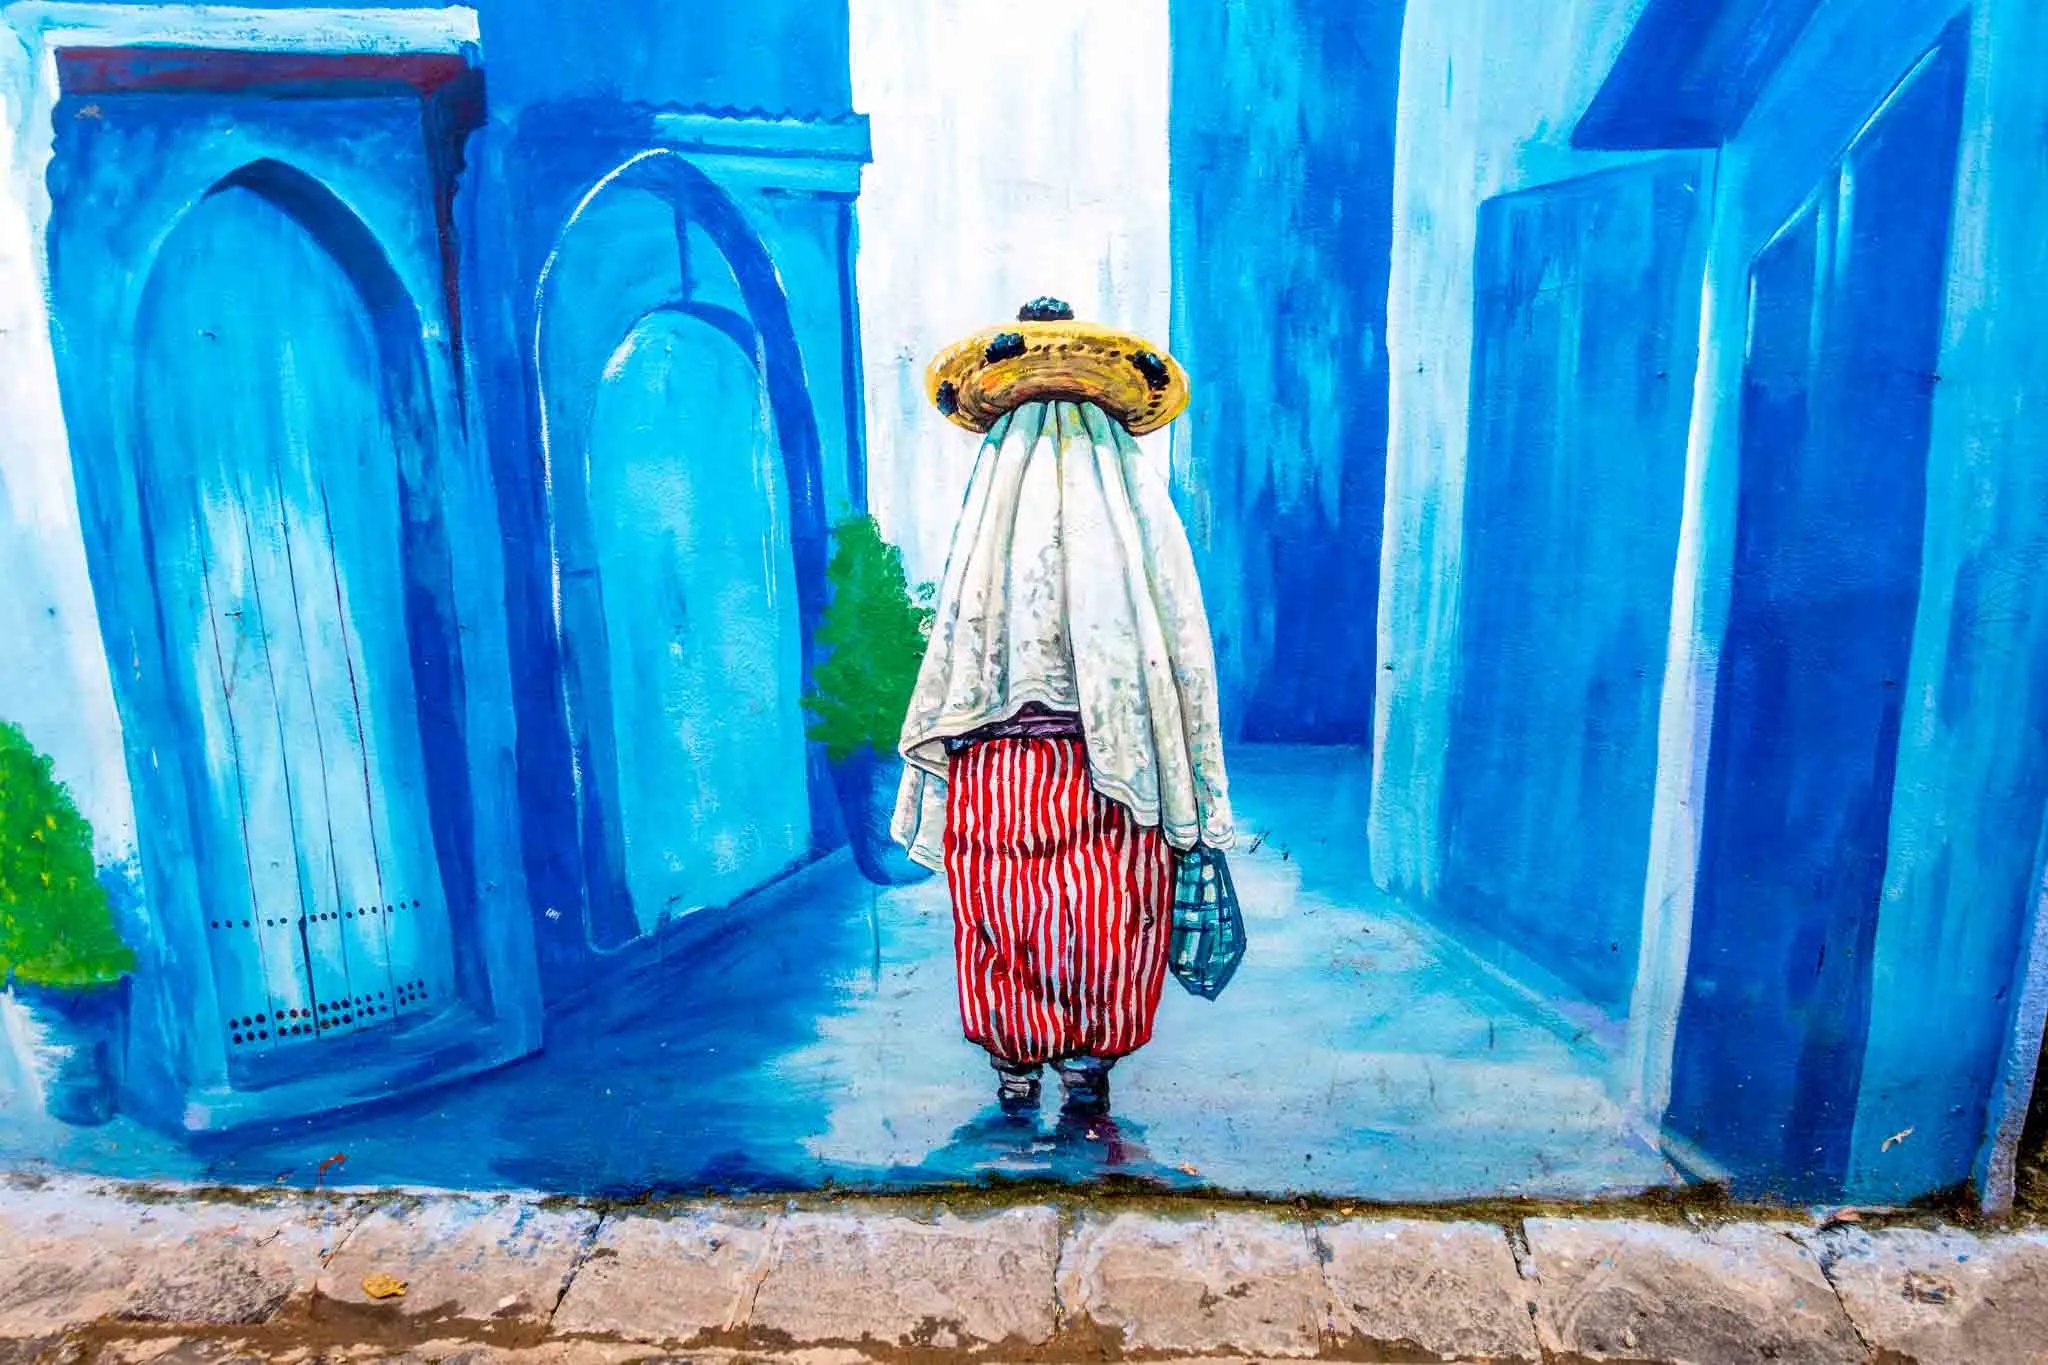 Street art mural of veiled woman